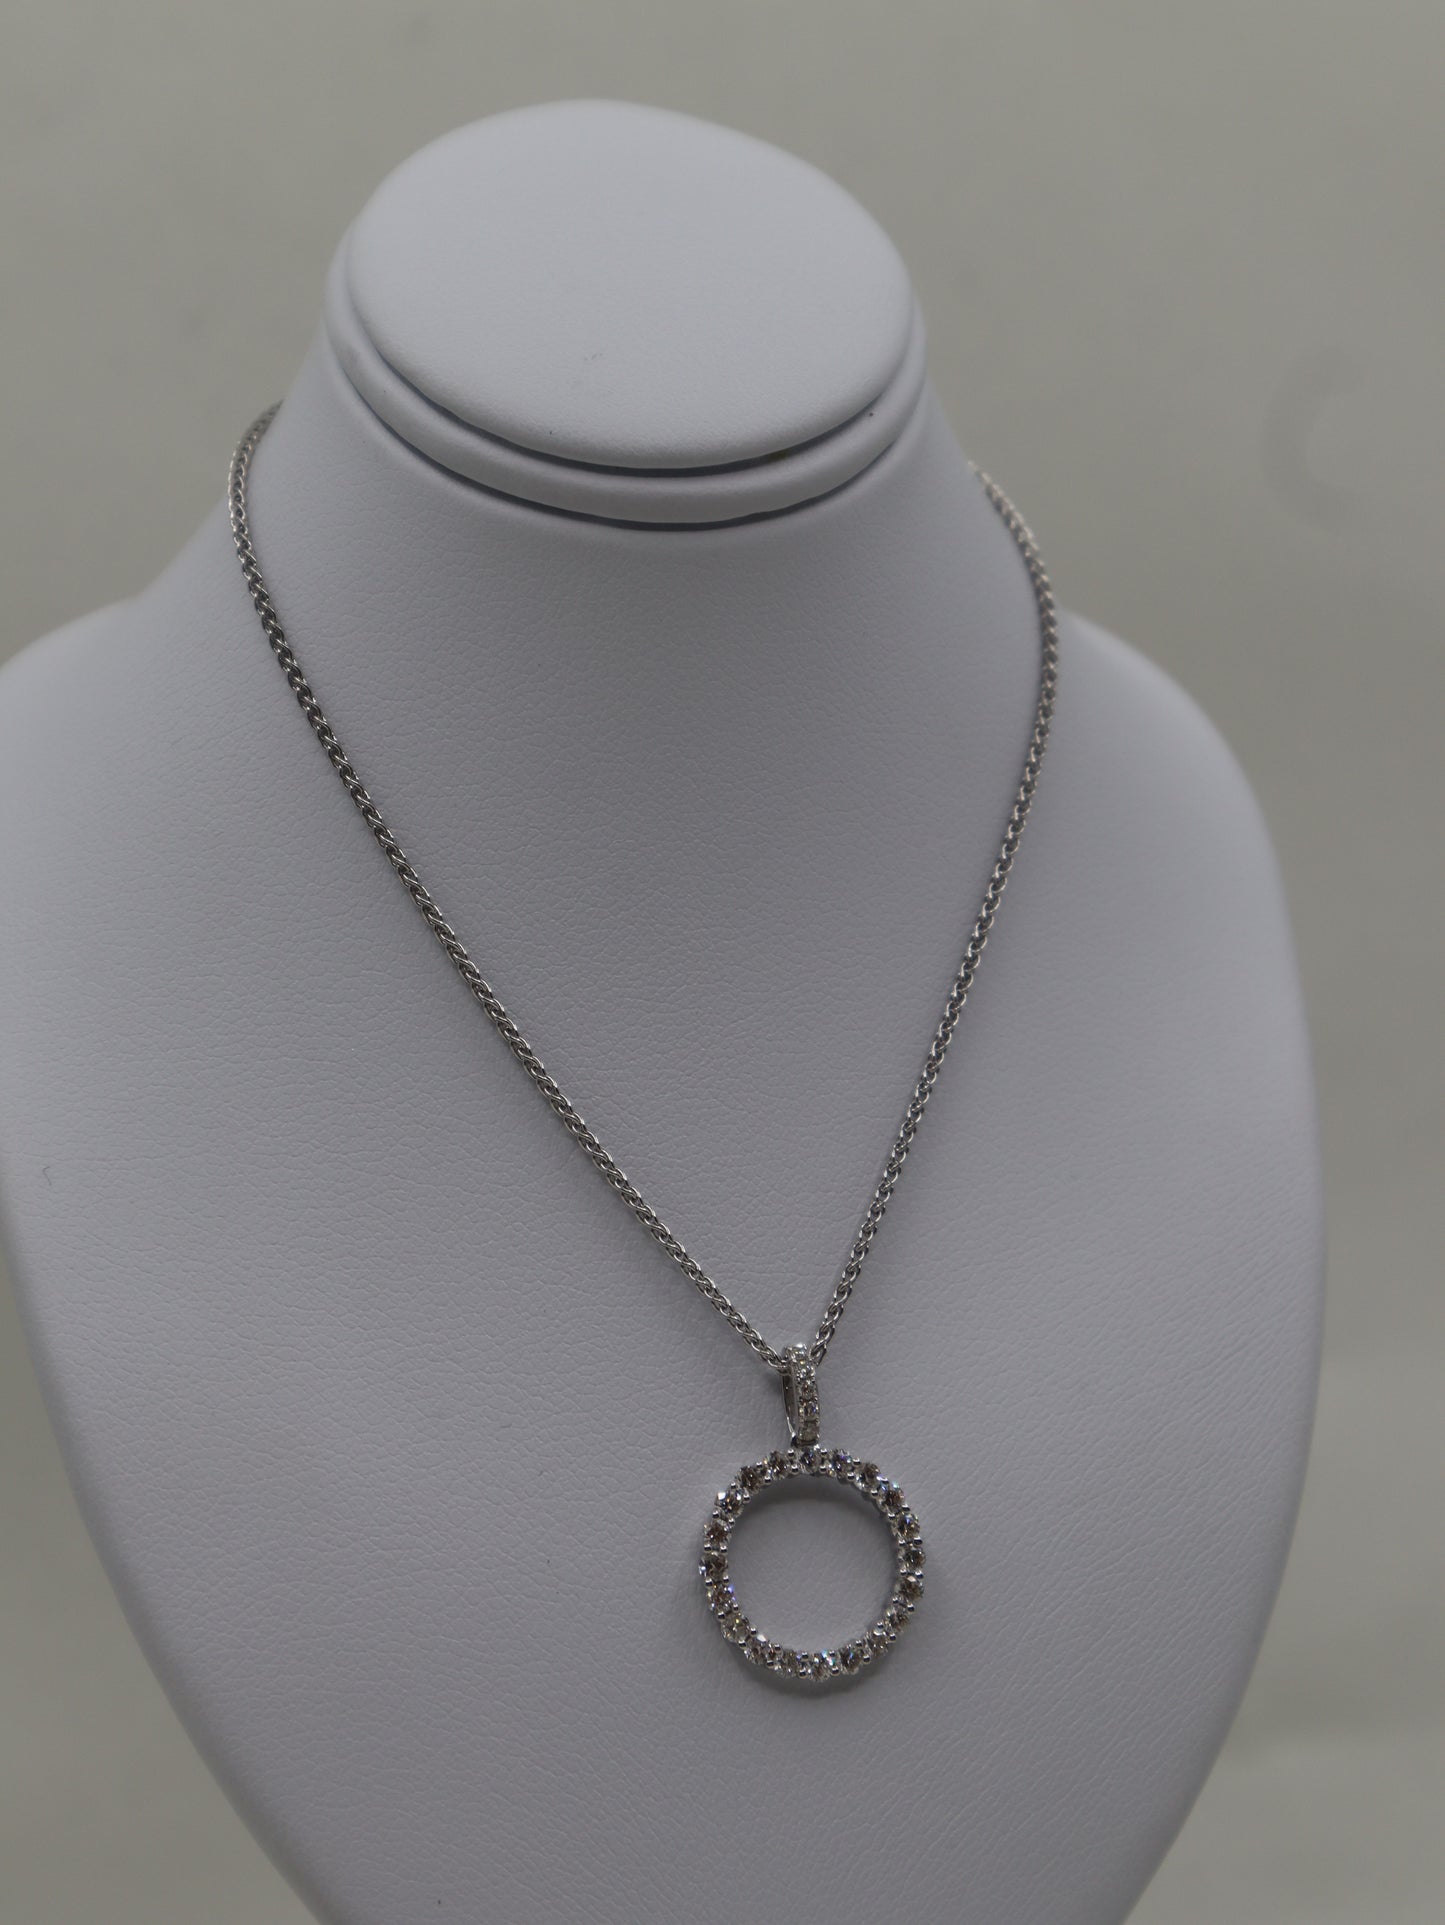 9ct White Gold Diamond Circle Pendant and Chain